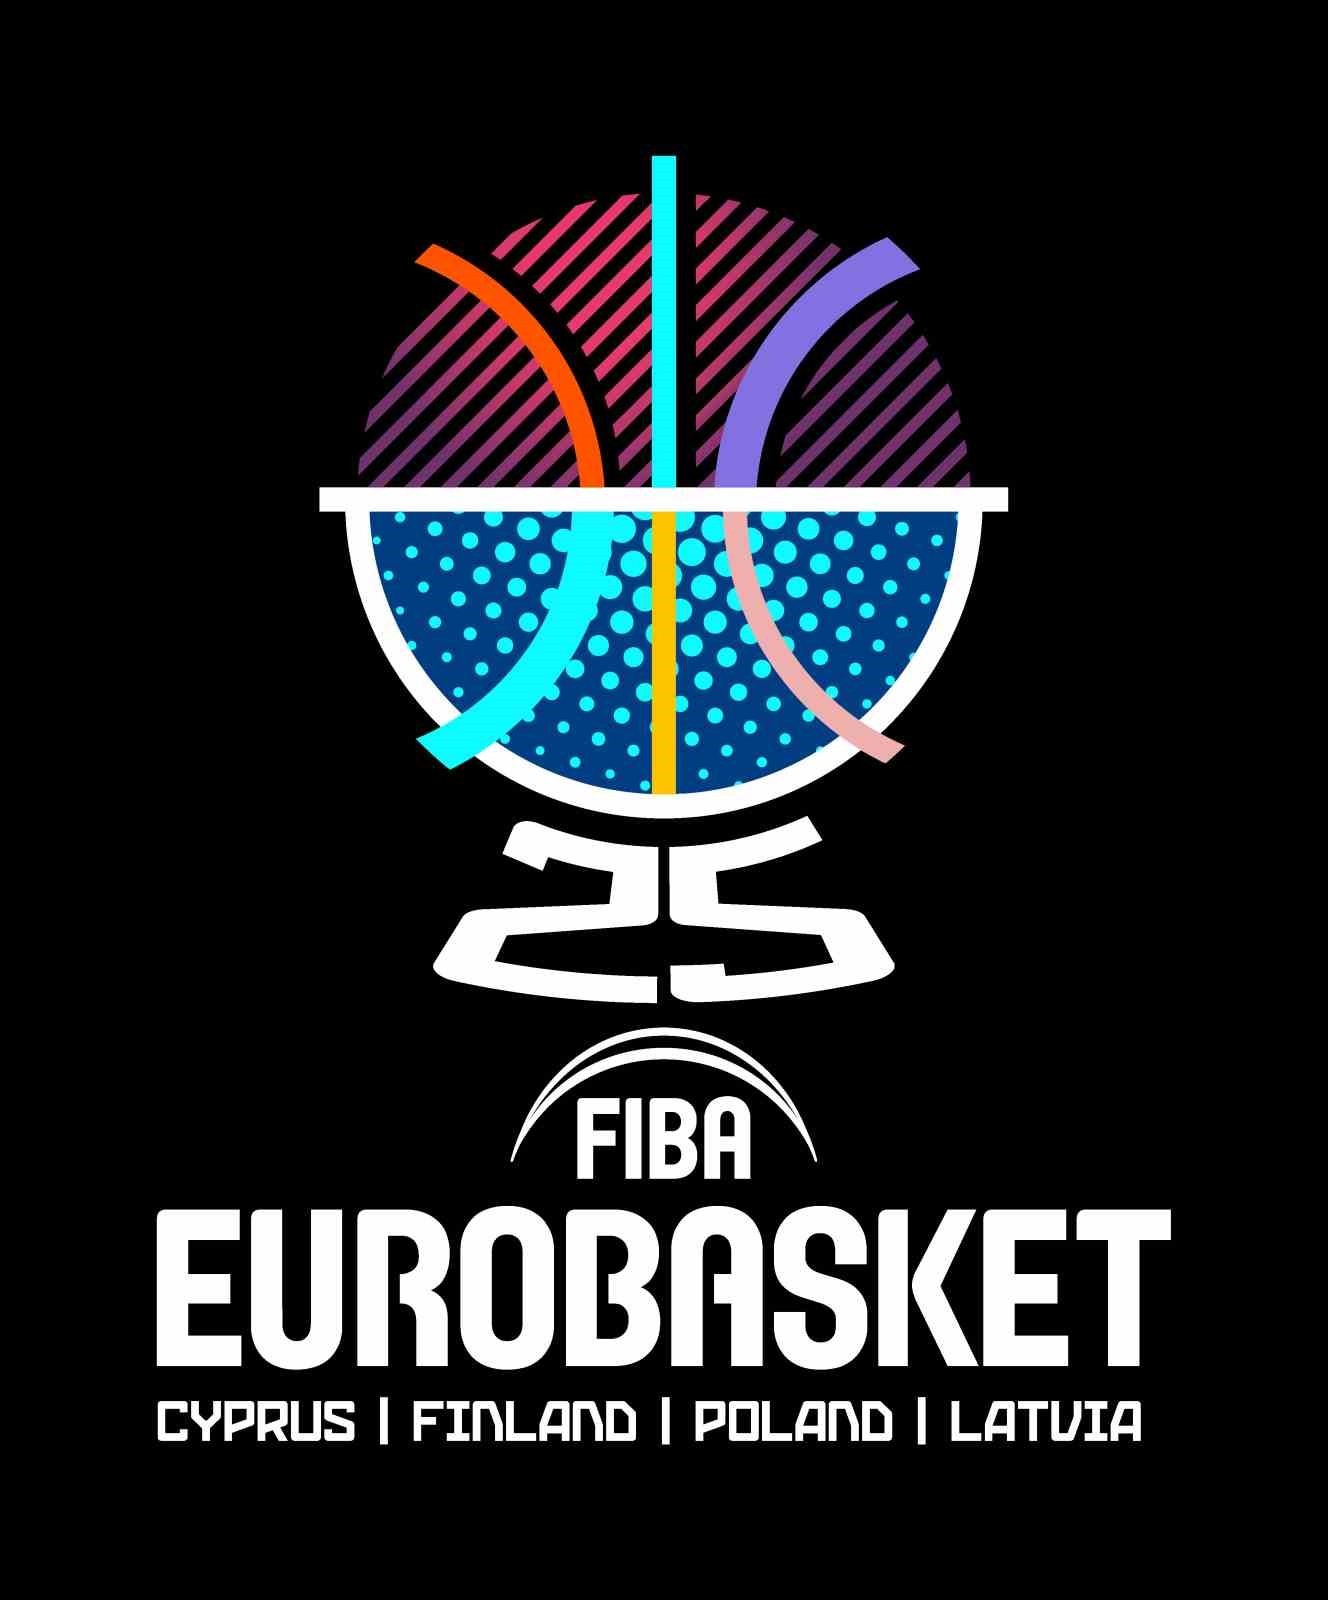 2023/12/fiba-eurobasket-2025in-logosu-tanitildi-20231205AW09-1.jpg